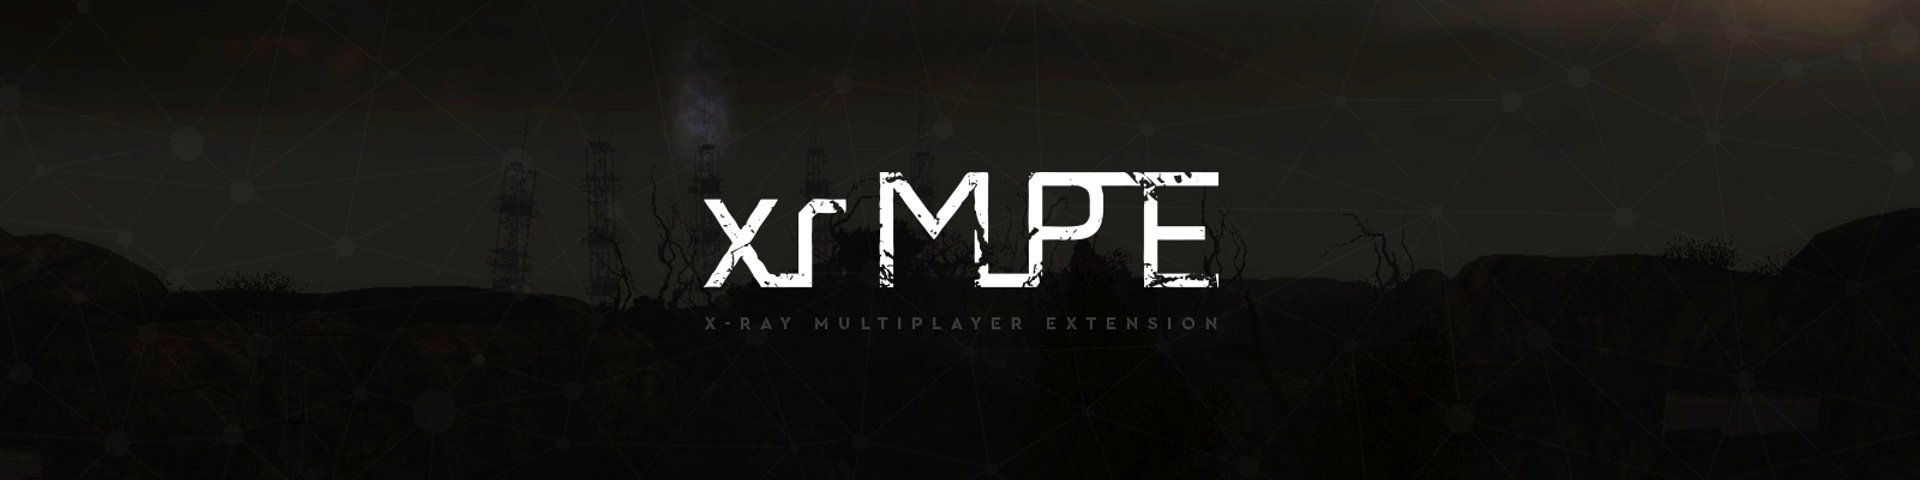 Xray multiplayer extension. ЧX ray Multiplayer.